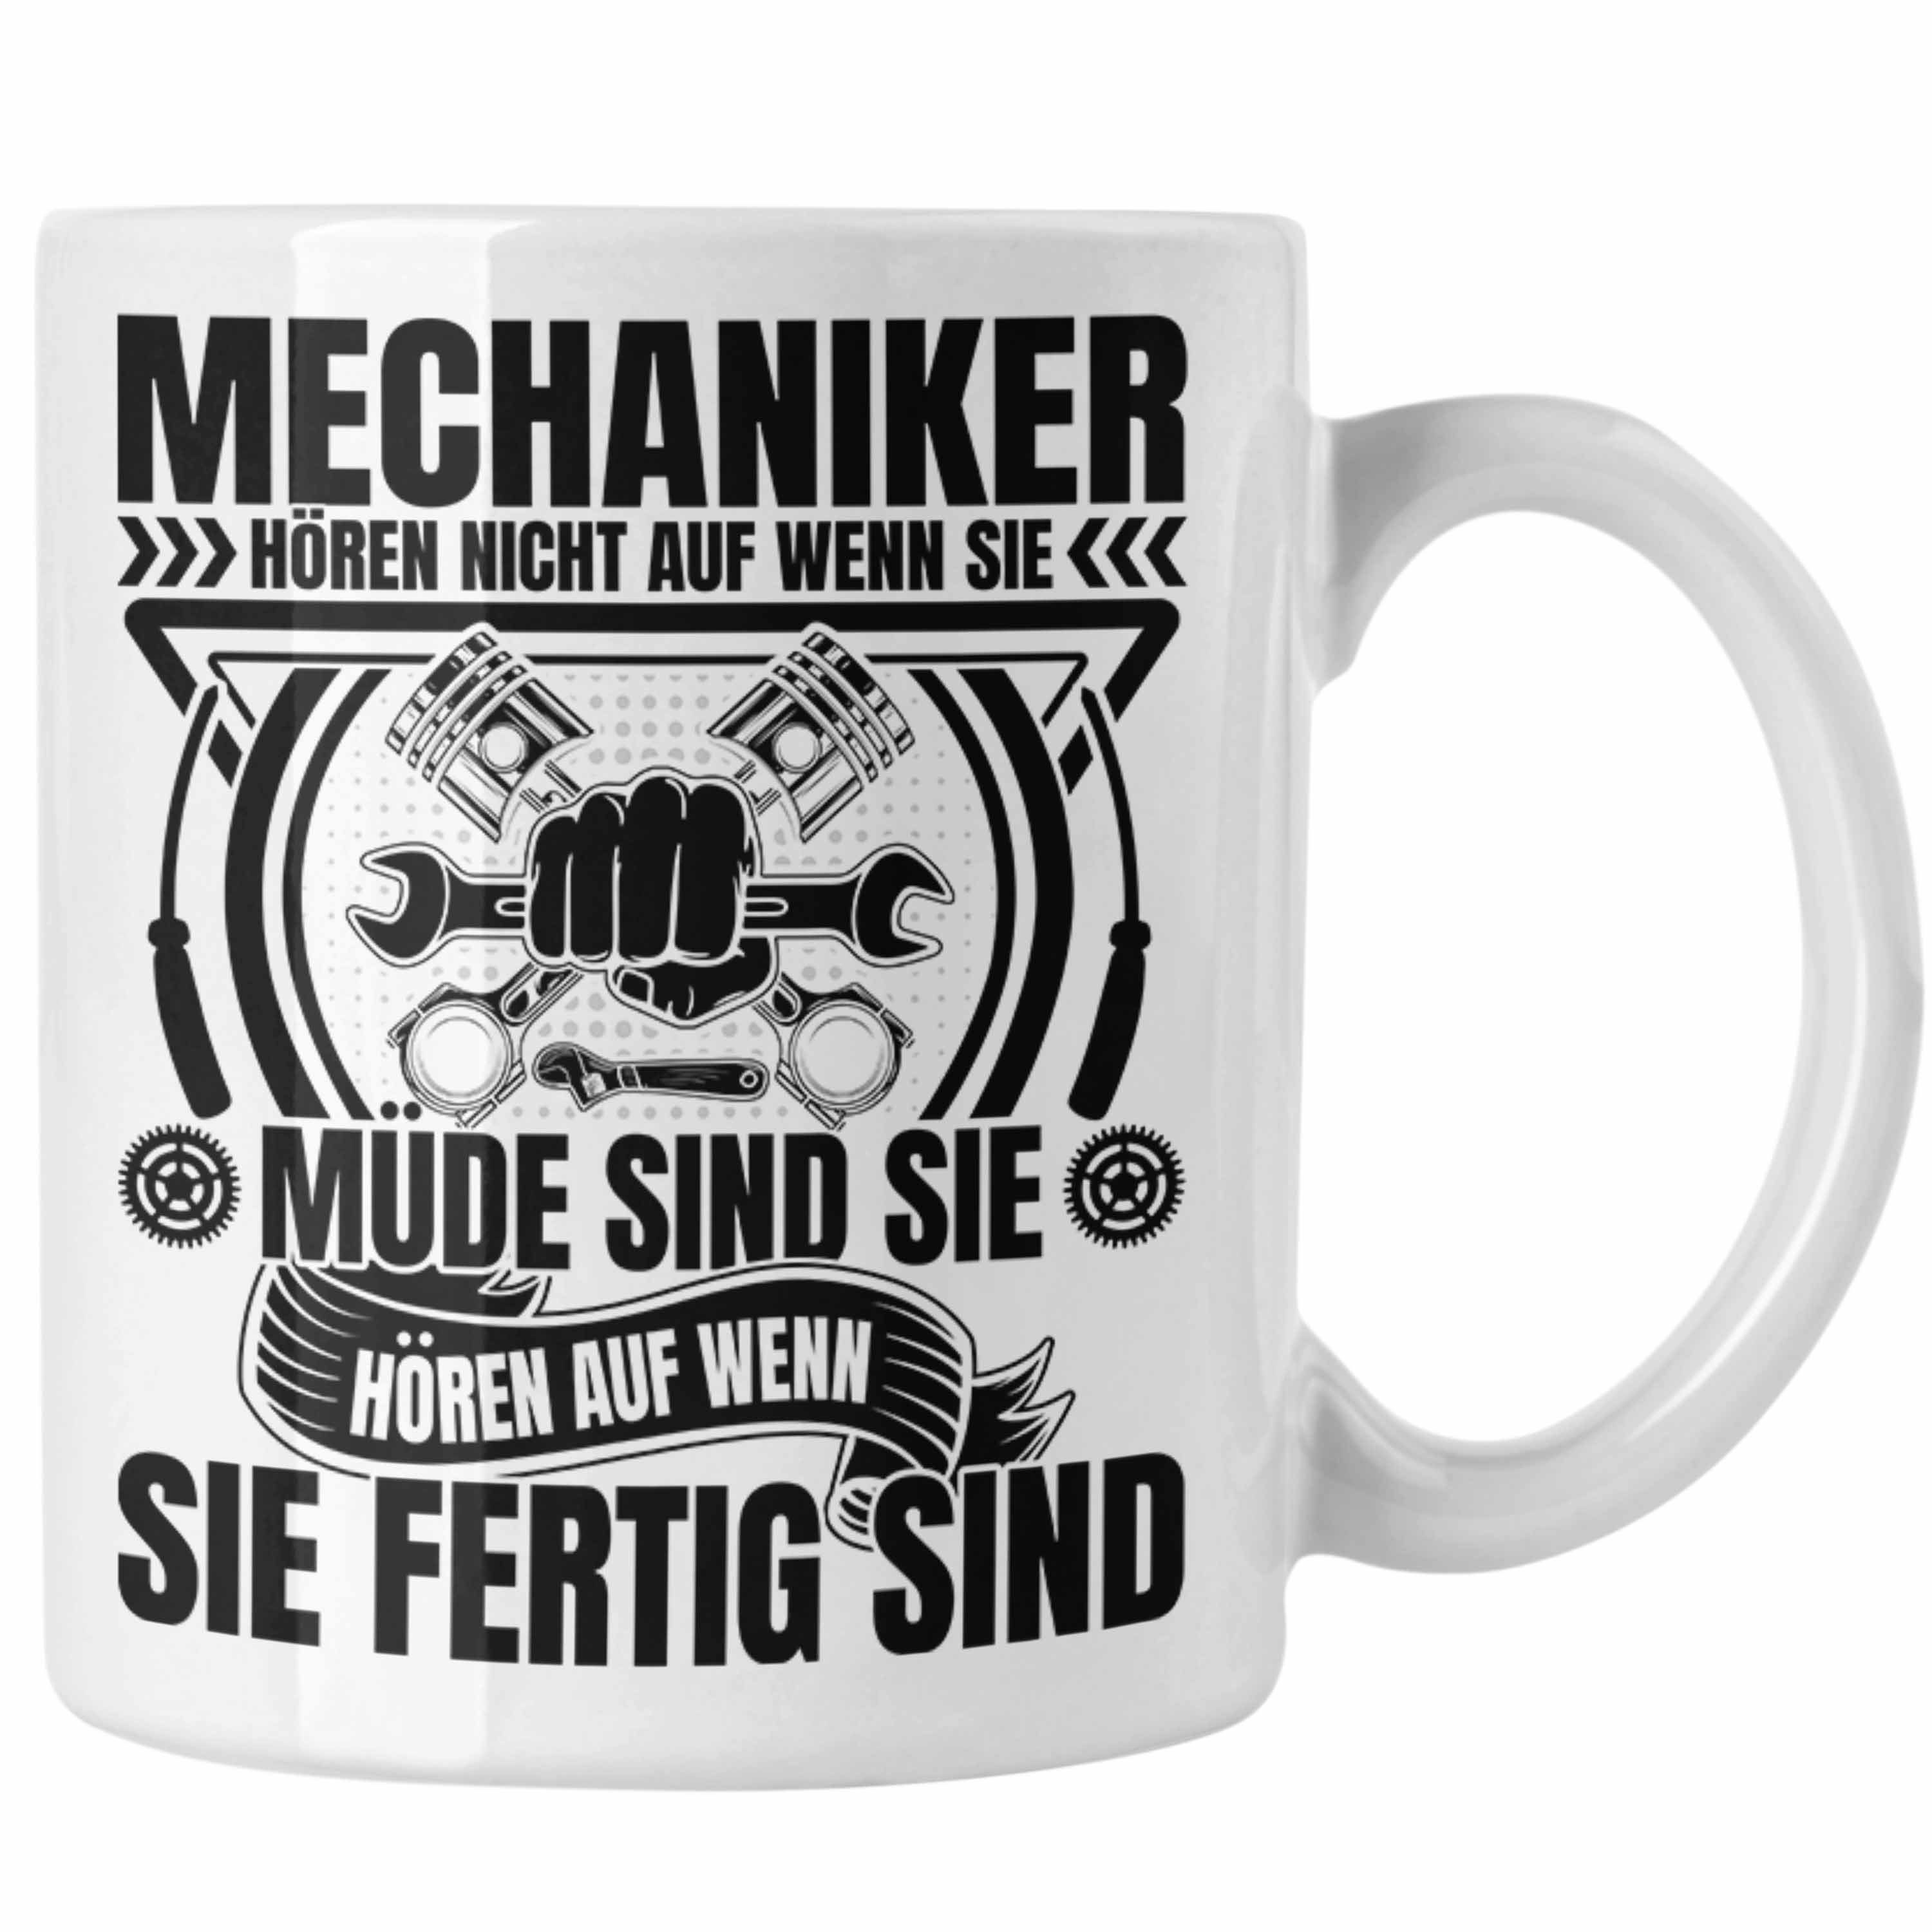 Trendation Tasse KFZ Mechaniker Tasse Geschenk Spruch Männer KFZ Mechatroniker Geschenk Weiss | Teetassen